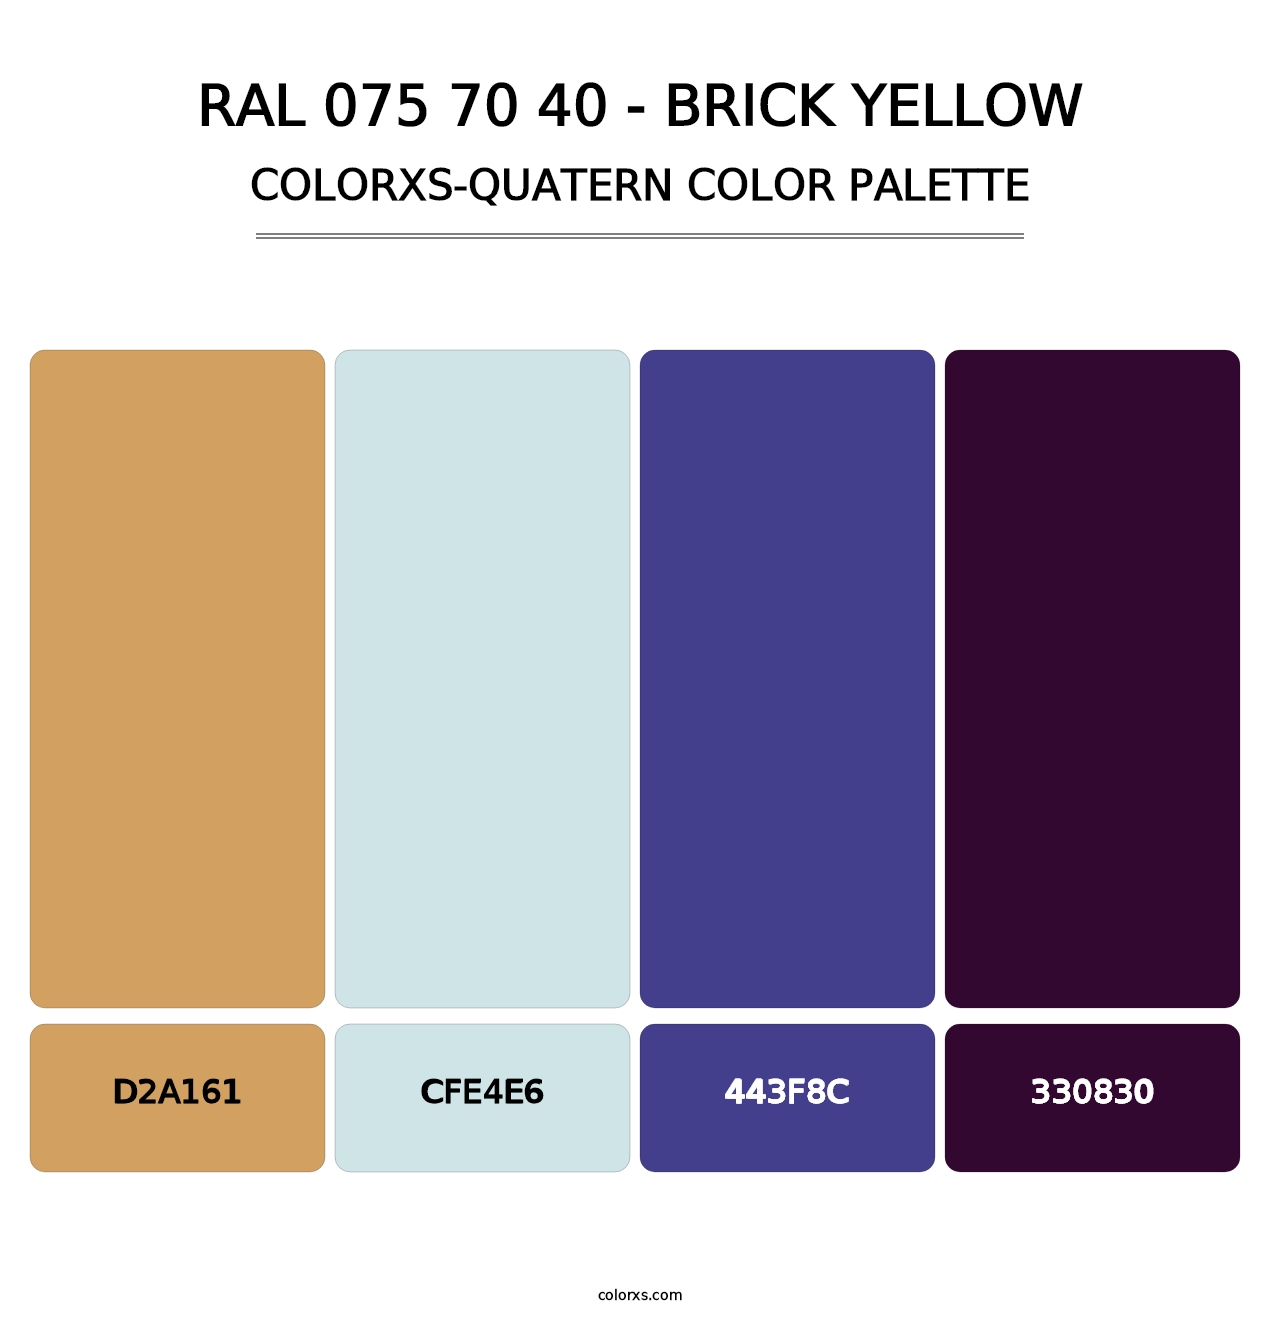 RAL 075 70 40 - Brick Yellow - Colorxs Quatern Palette